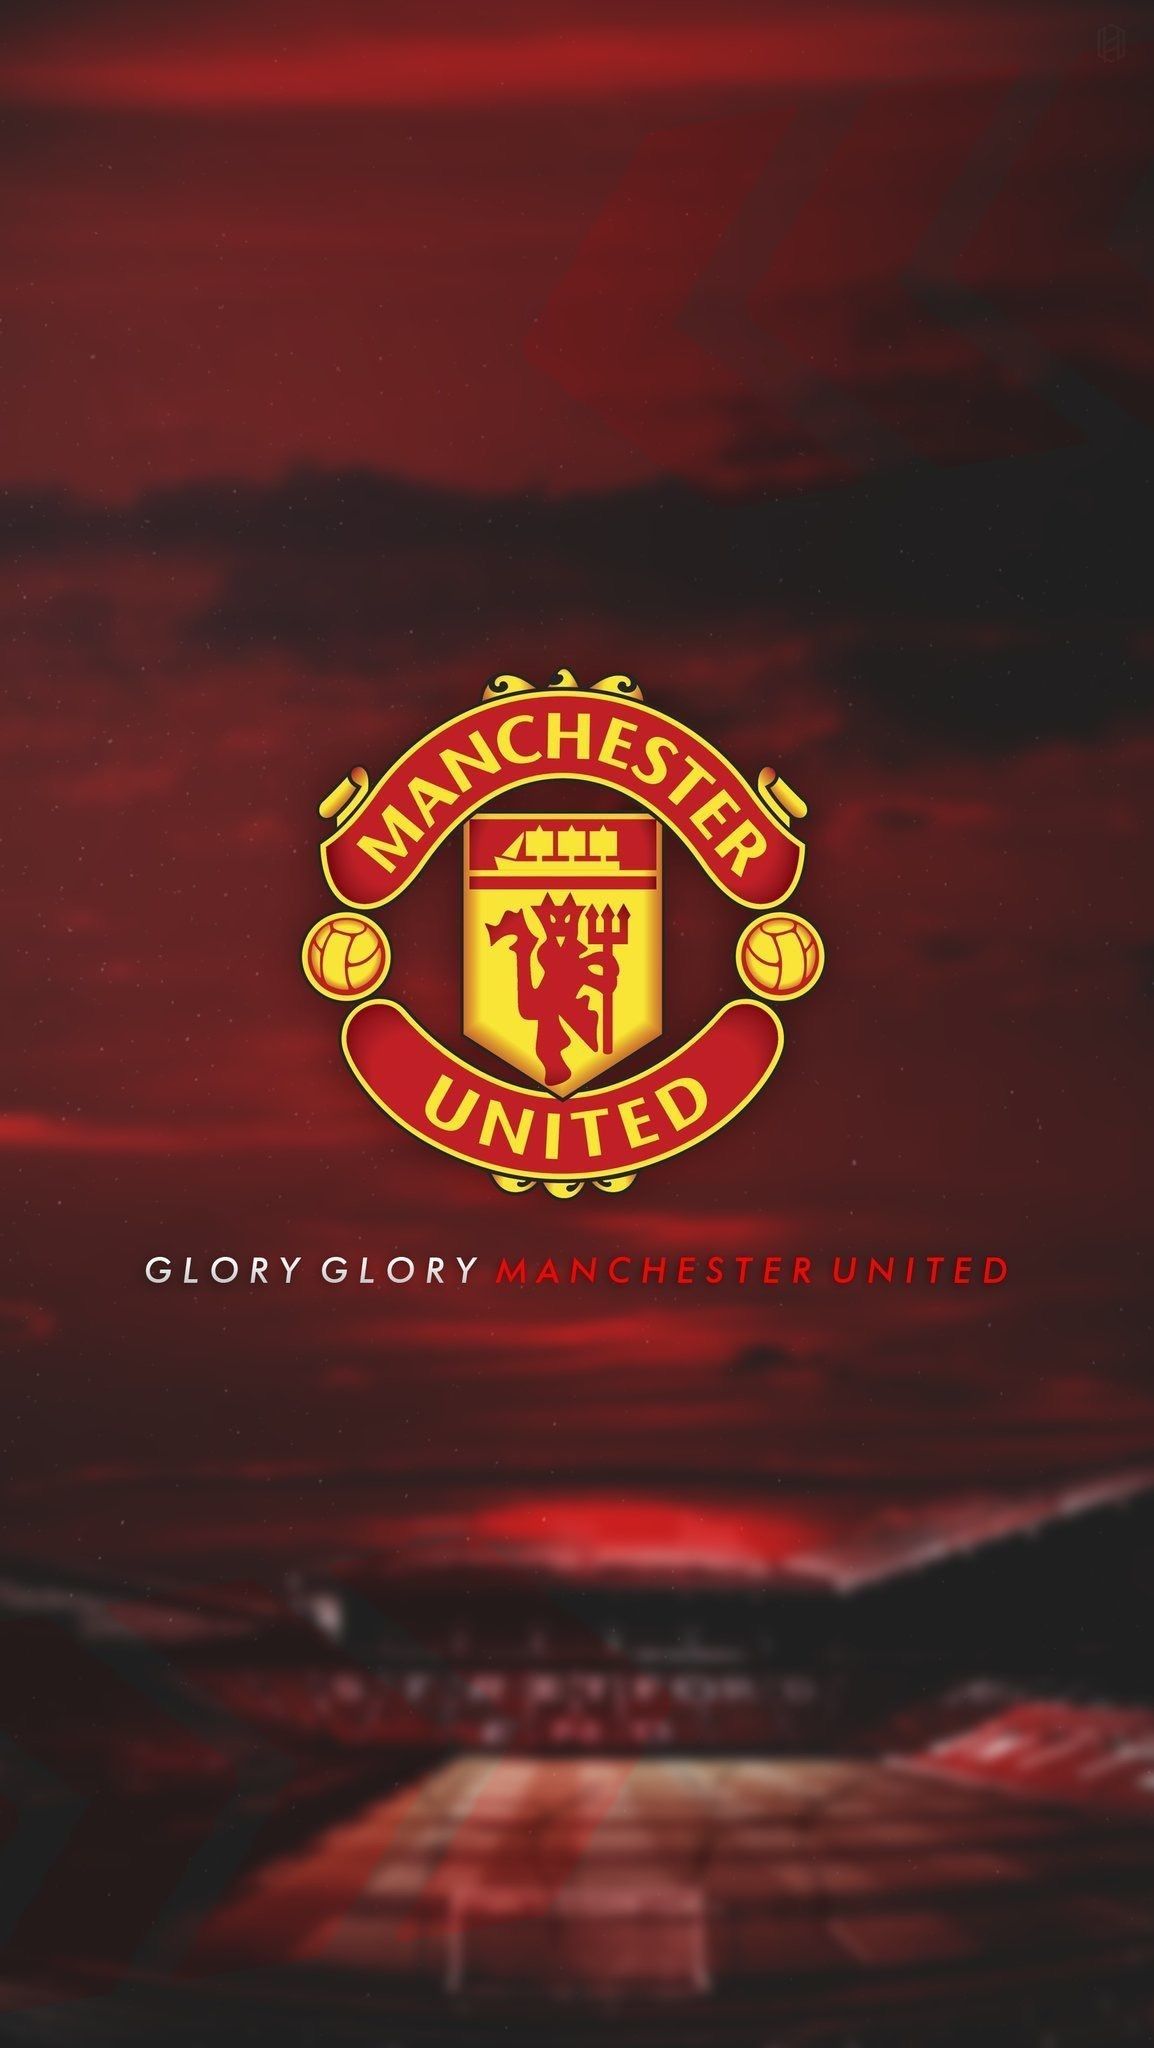 Man Utd Wallpaper. Manchester united wallpaper iphone, Manchester united wallpaper, Manchester united logo